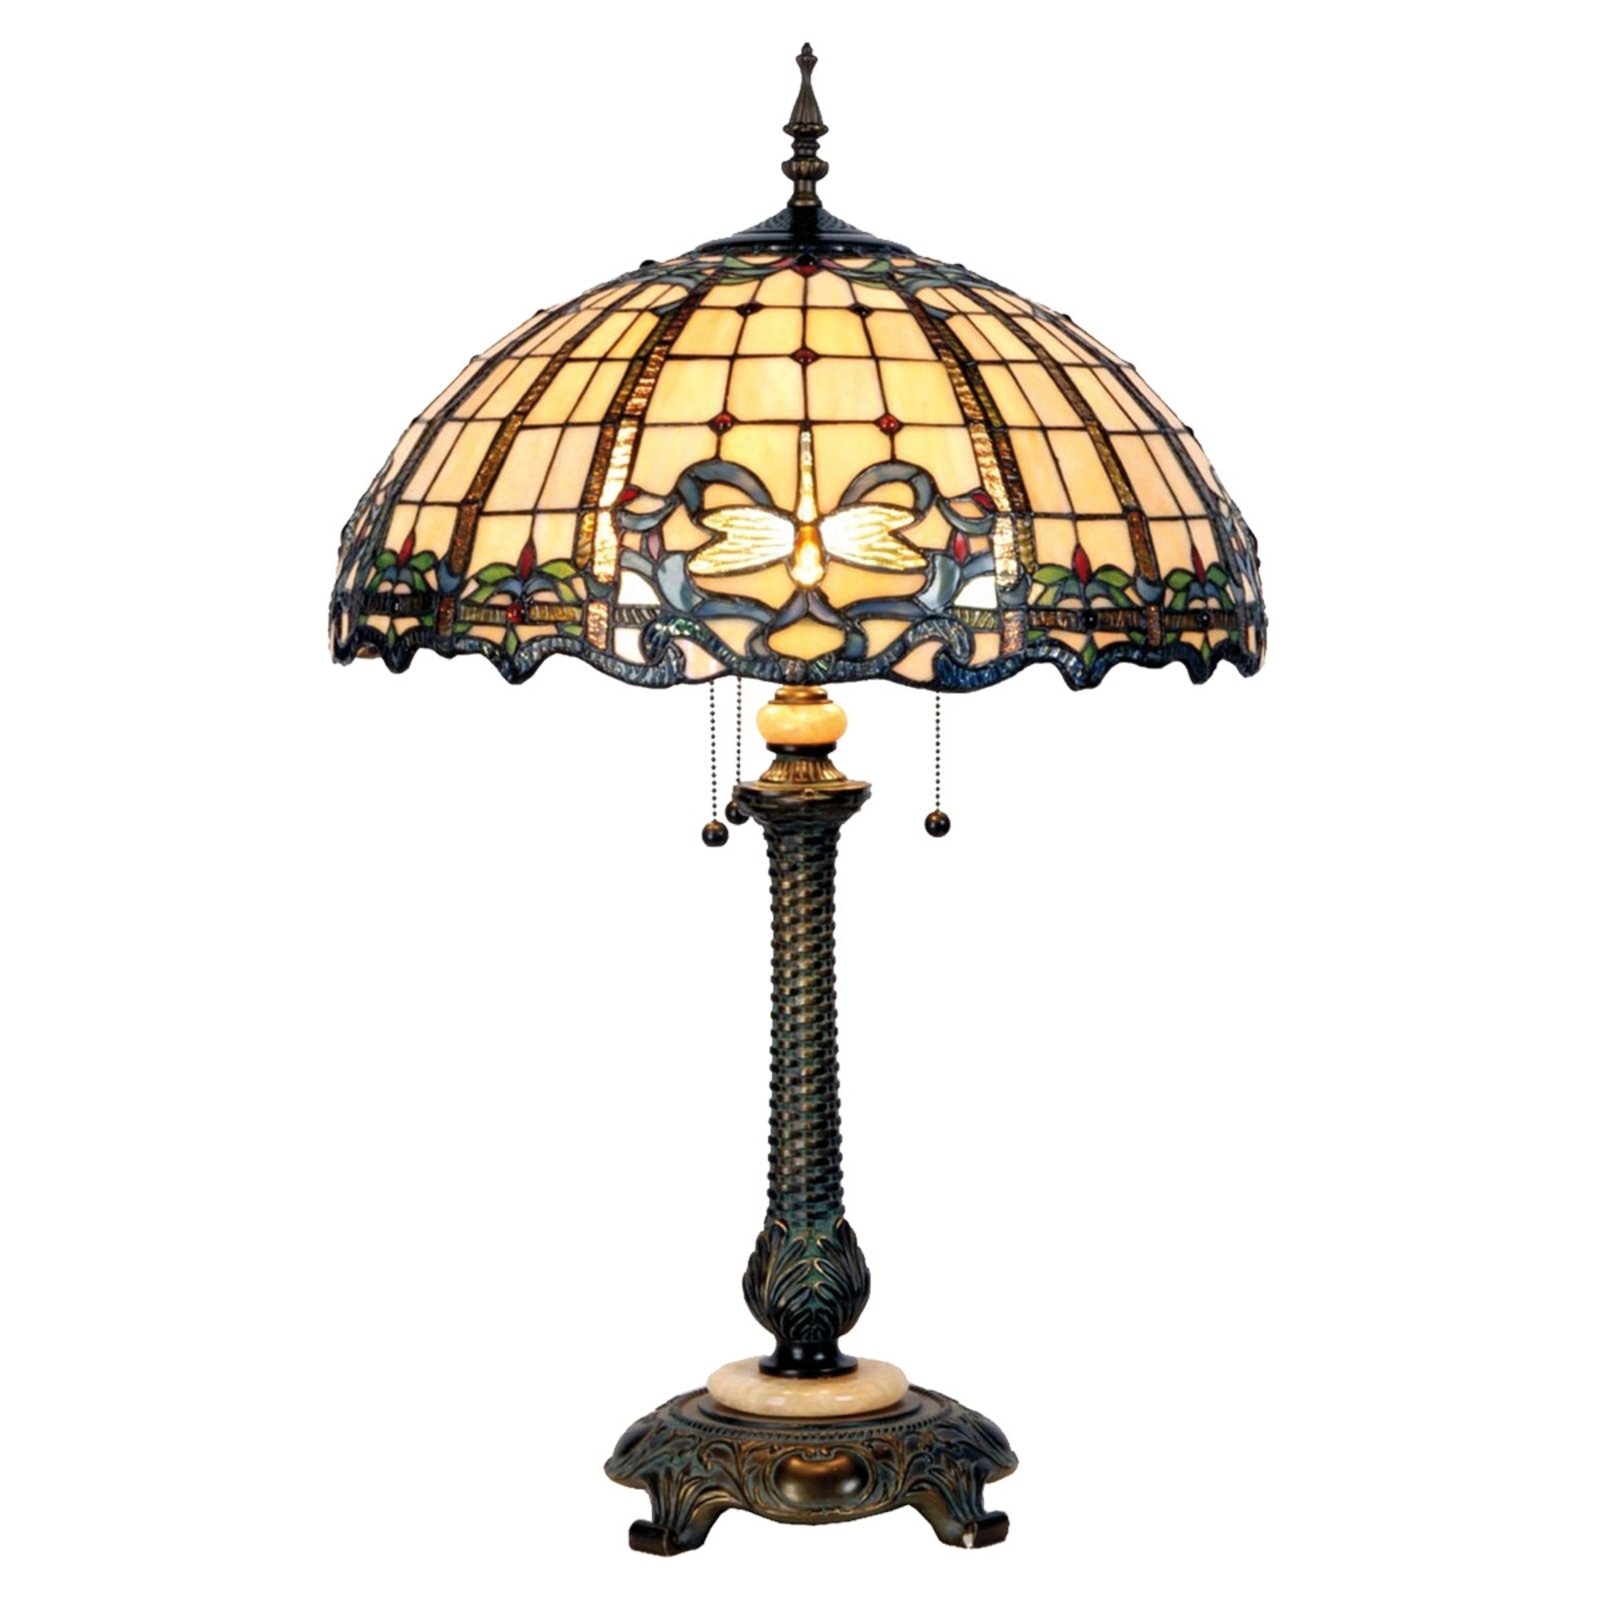 Wonderful Atlantis table lamp, Tiffany design